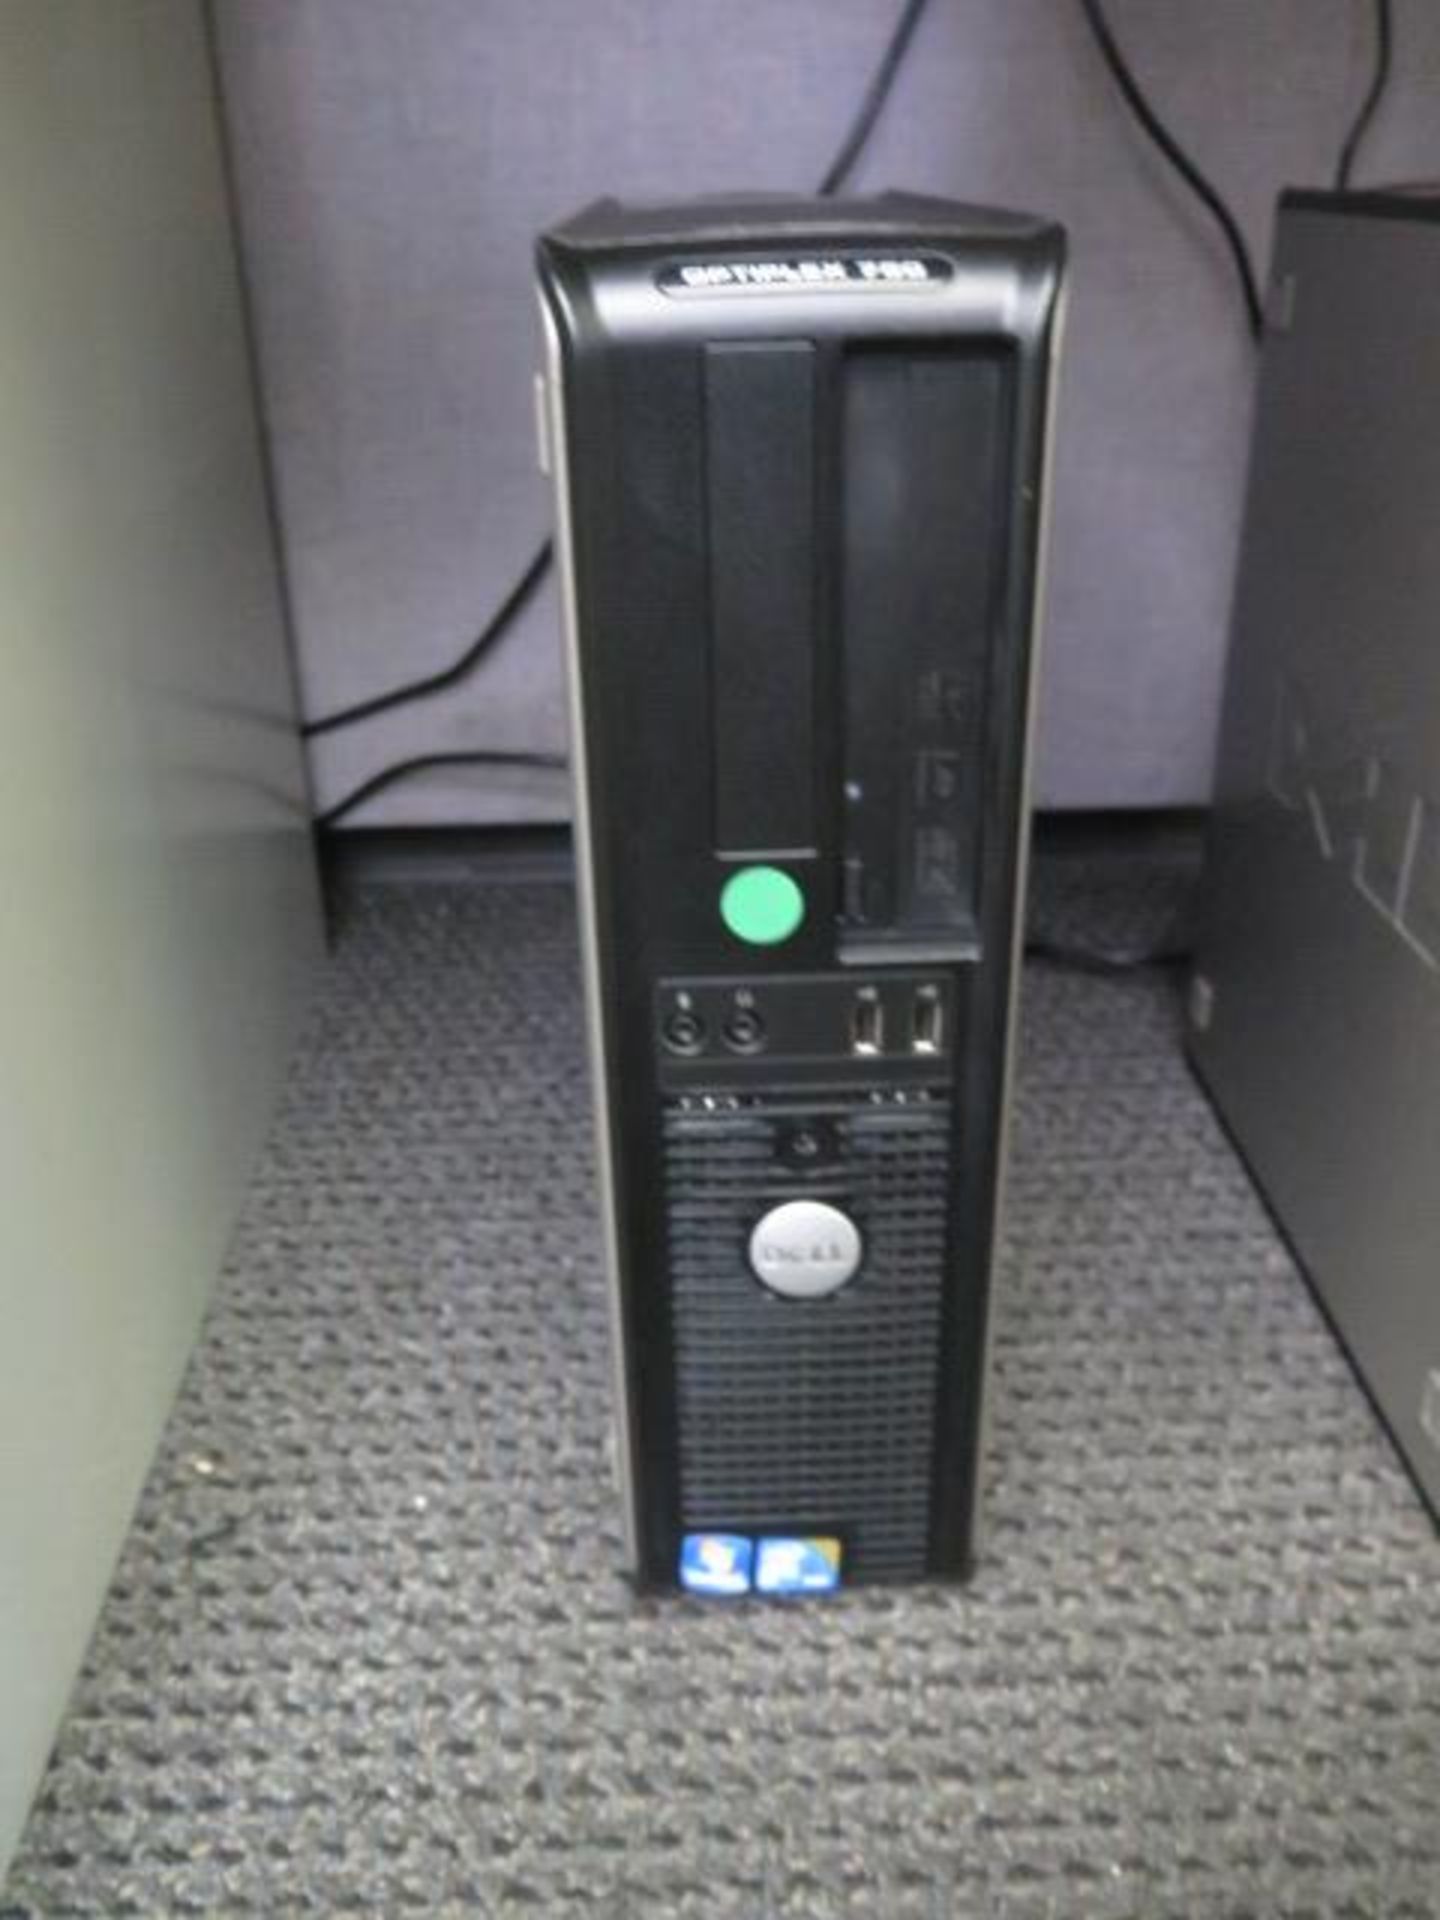 Dell Optiflex 780 Computers (2) w/ Desk (SOLD AS-IS - NO WARRANTY) - Image 4 of 7